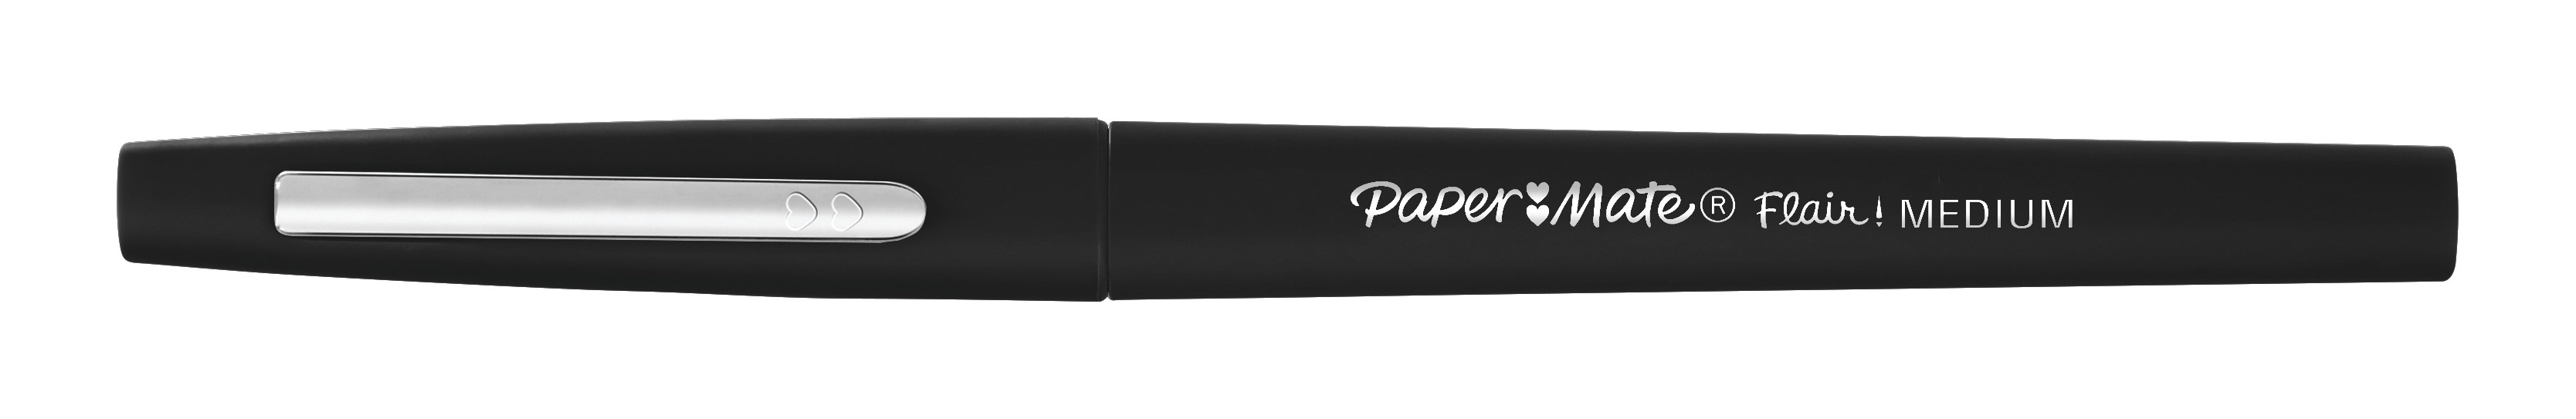 Paper Mate Flair Felt Tip Pens, Medium Point (0.7mm), Black, 12 Count 